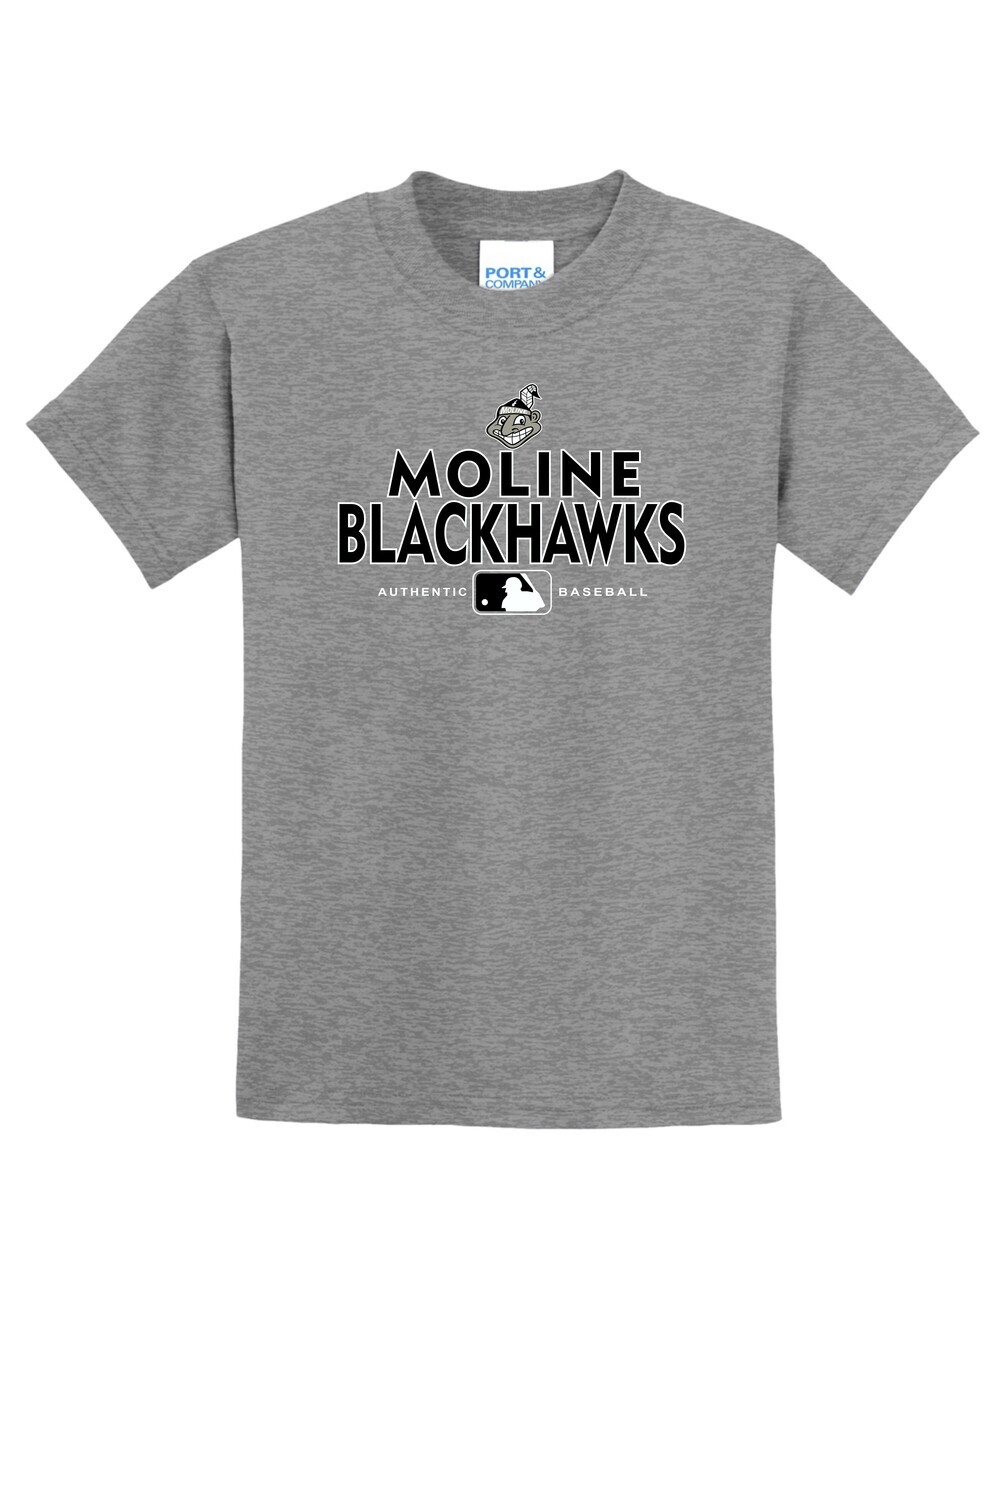 Moline Blackhawks Retro Logo 50/50 Blend Youth T-Shirt